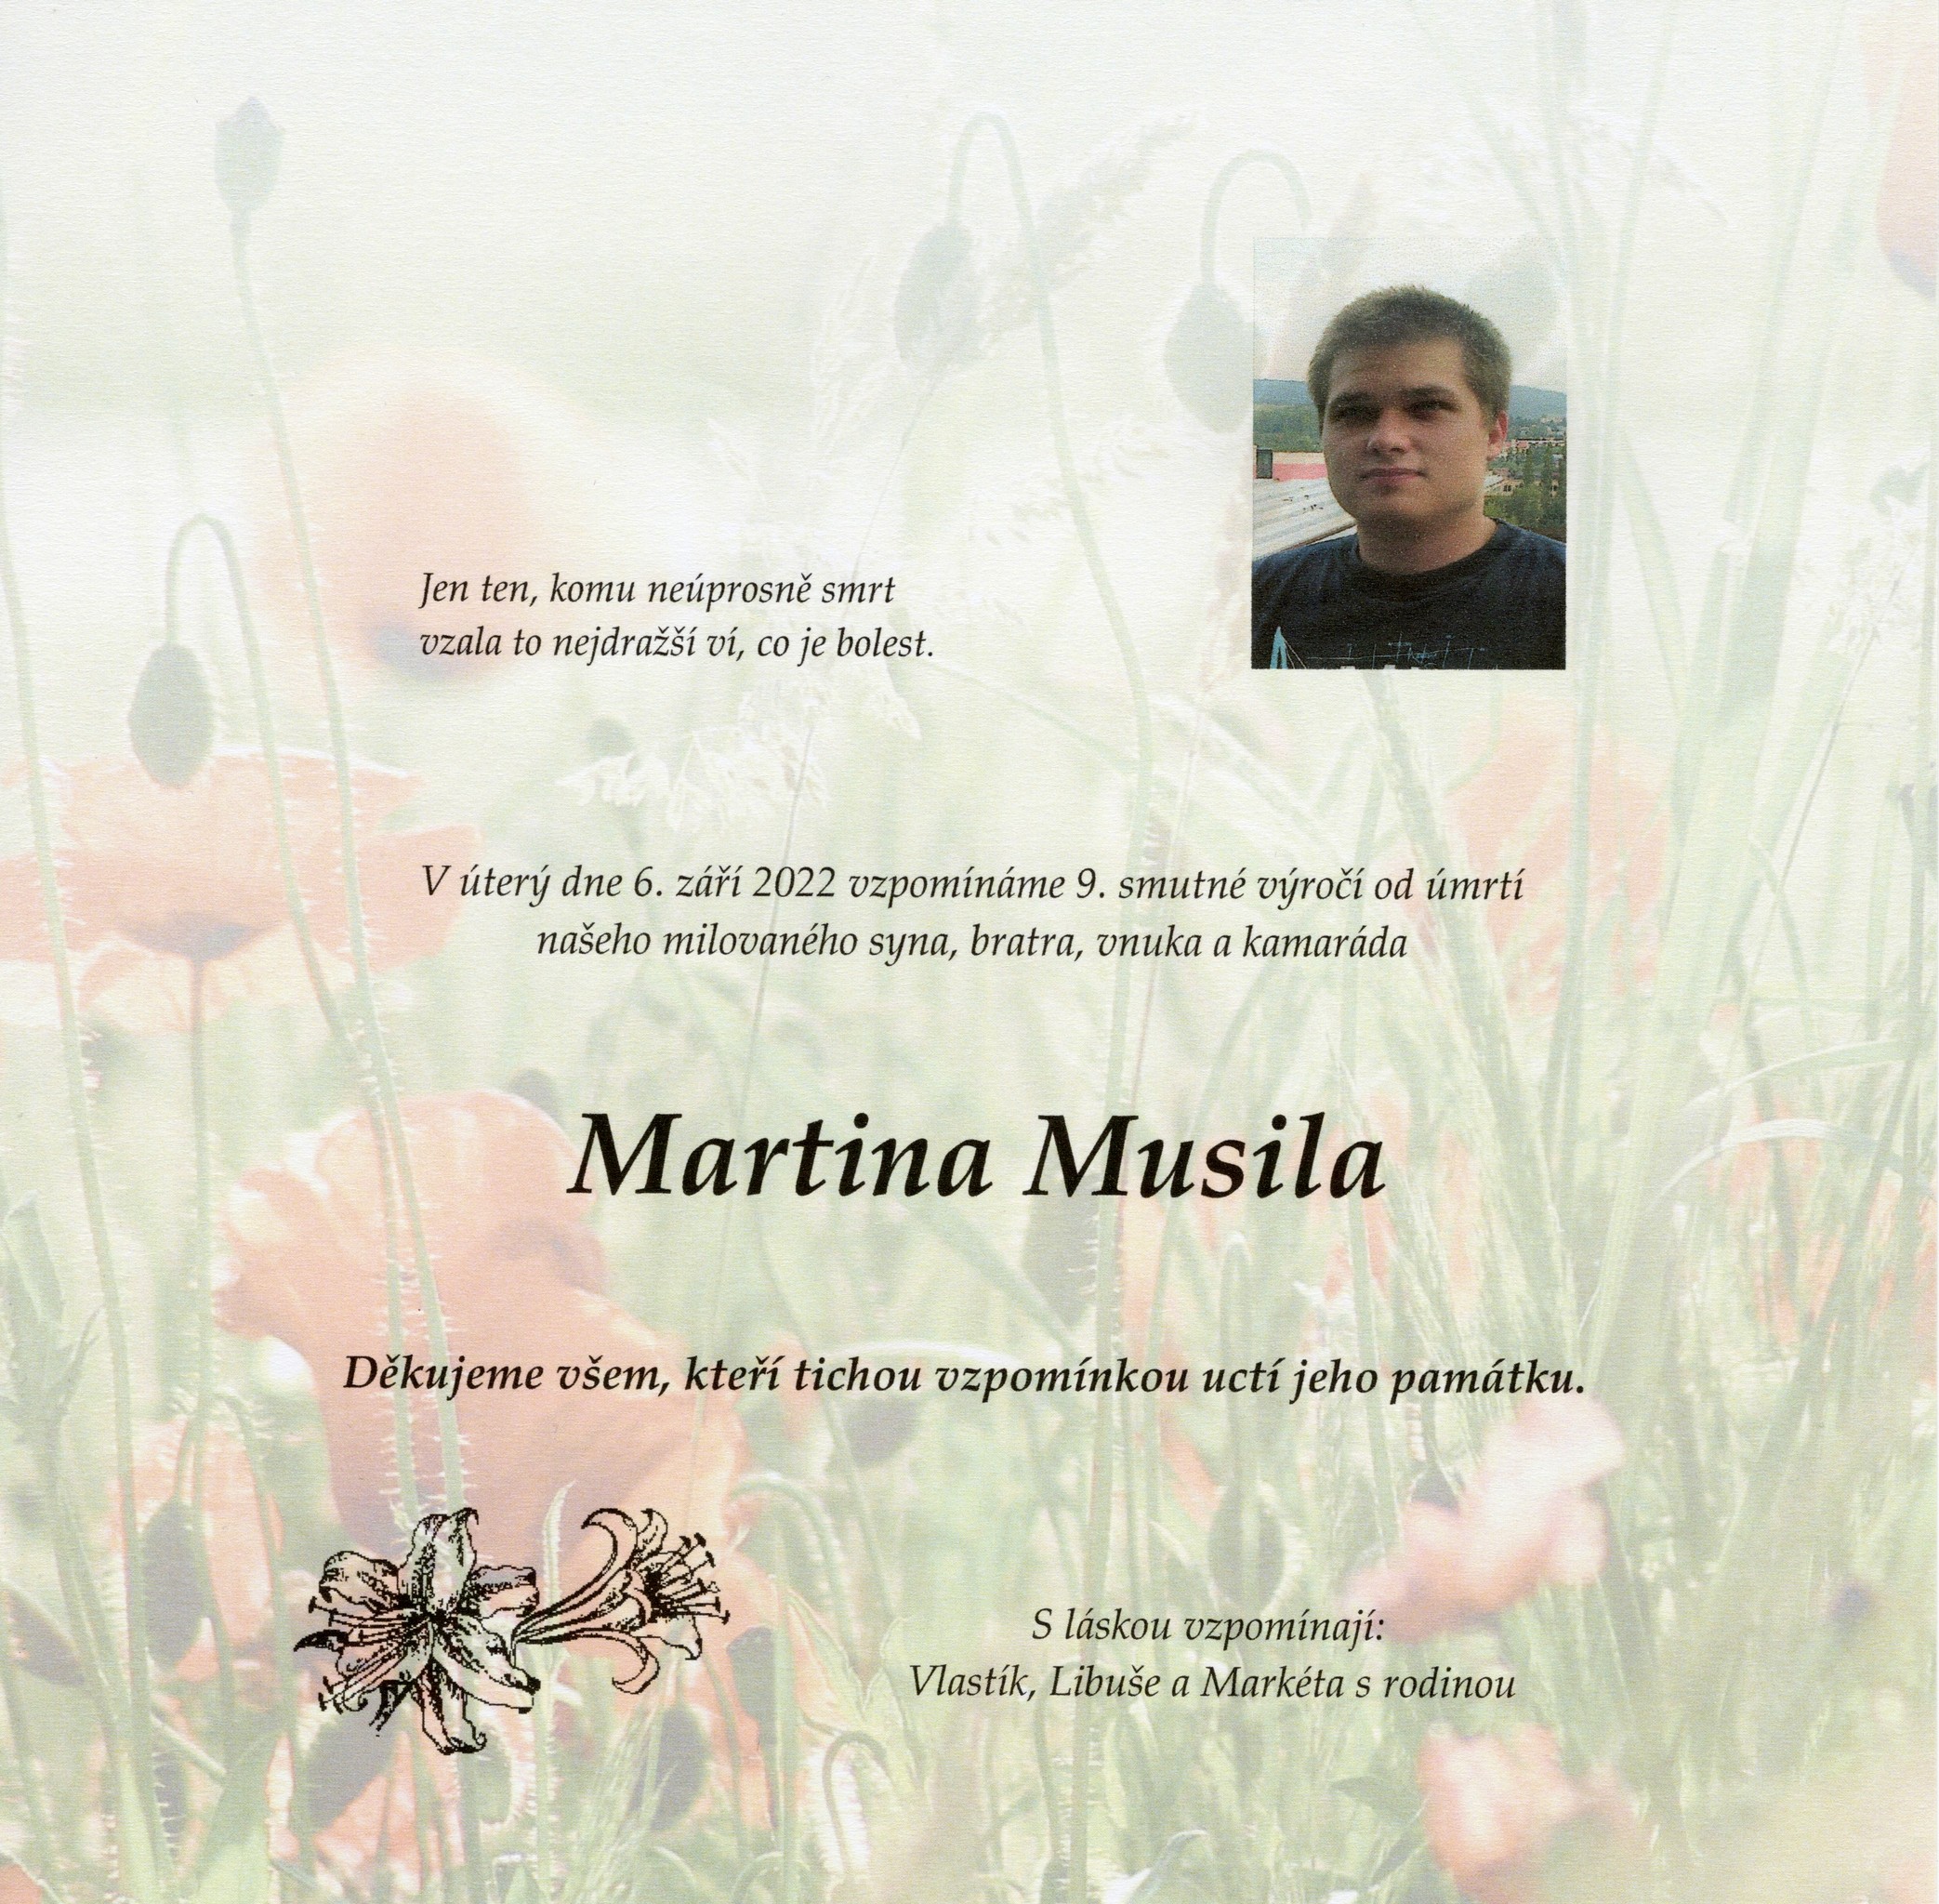 Martin Musil